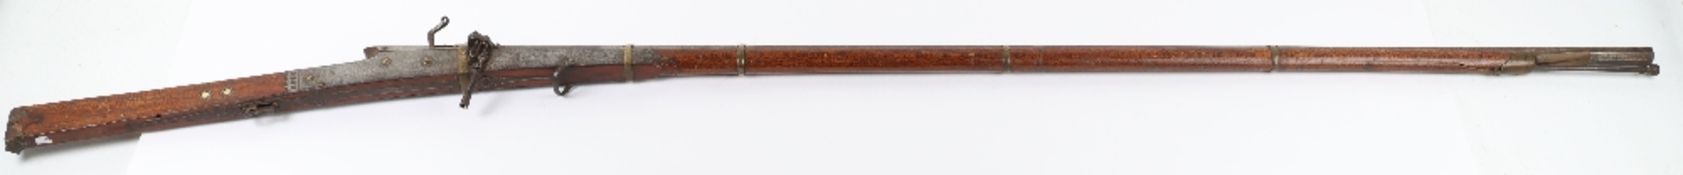 32 Bore Indian Matchlock Gun Torador, Probably Punjab First Half of the 19th Century